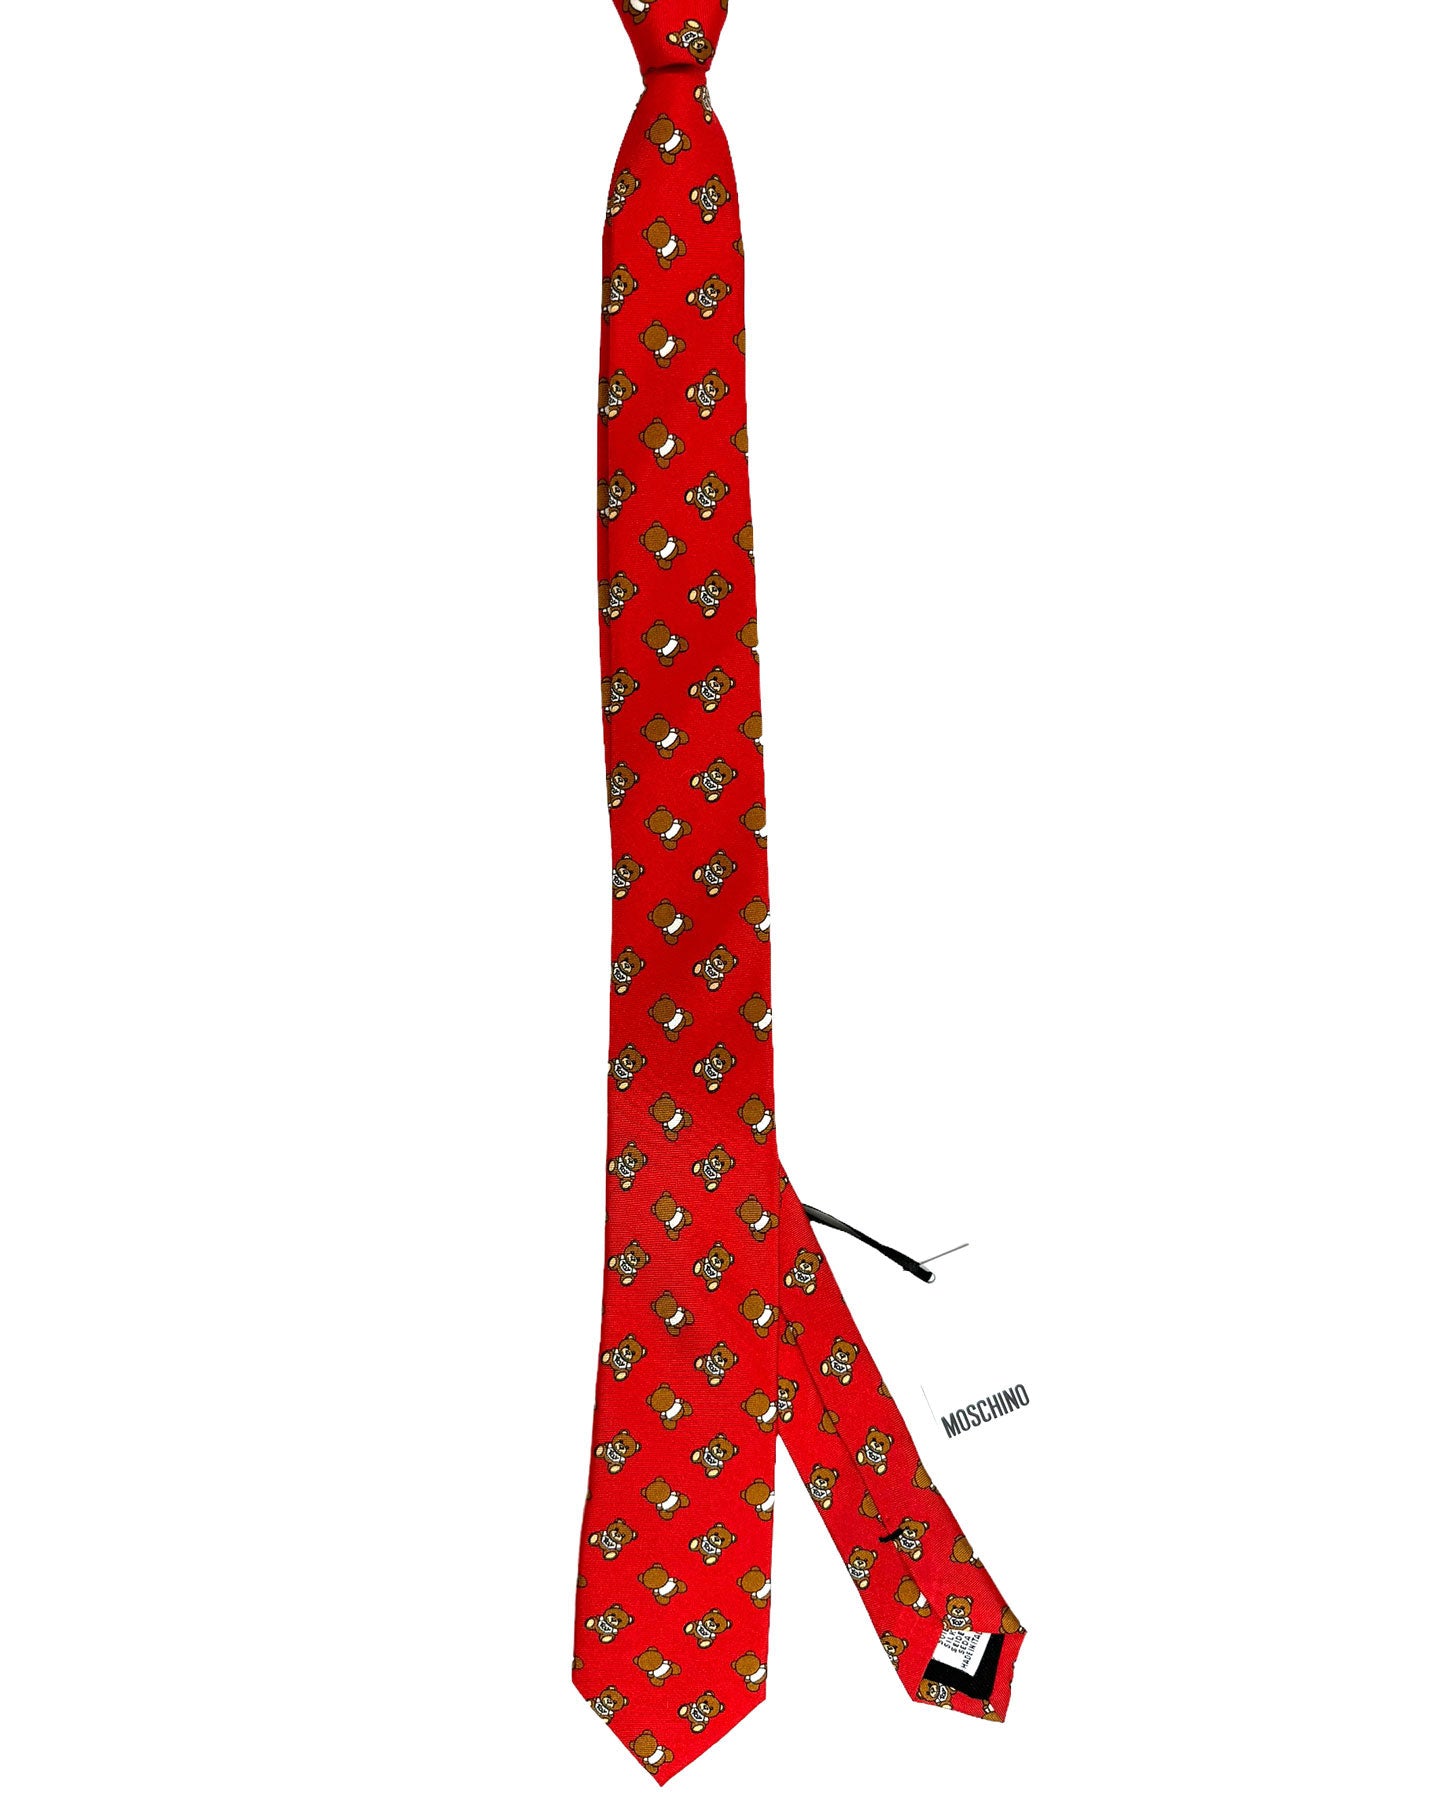 Moschino Tie Red Toy Bear Design